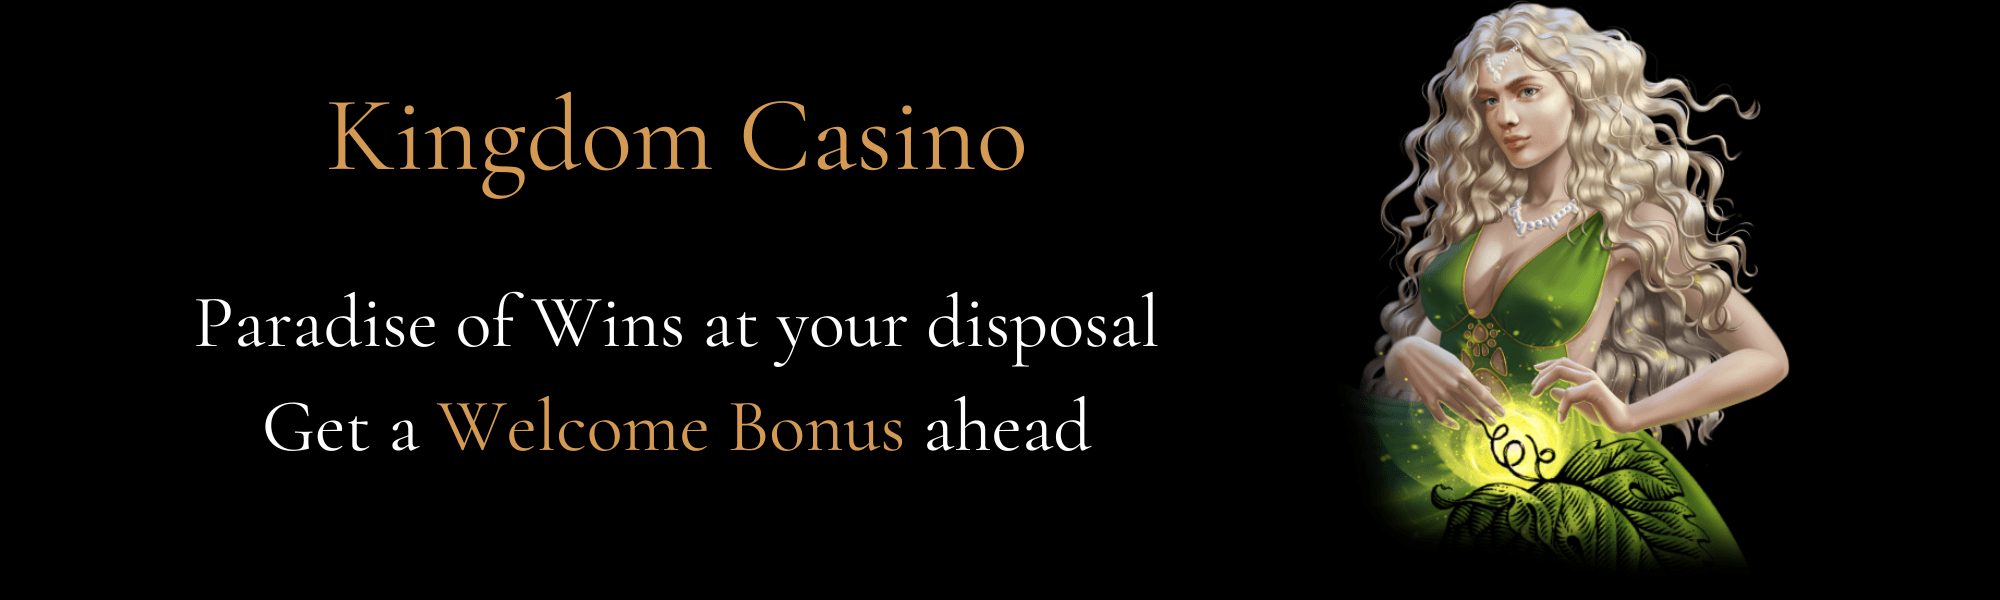 Kingdom Casino Bonus.png